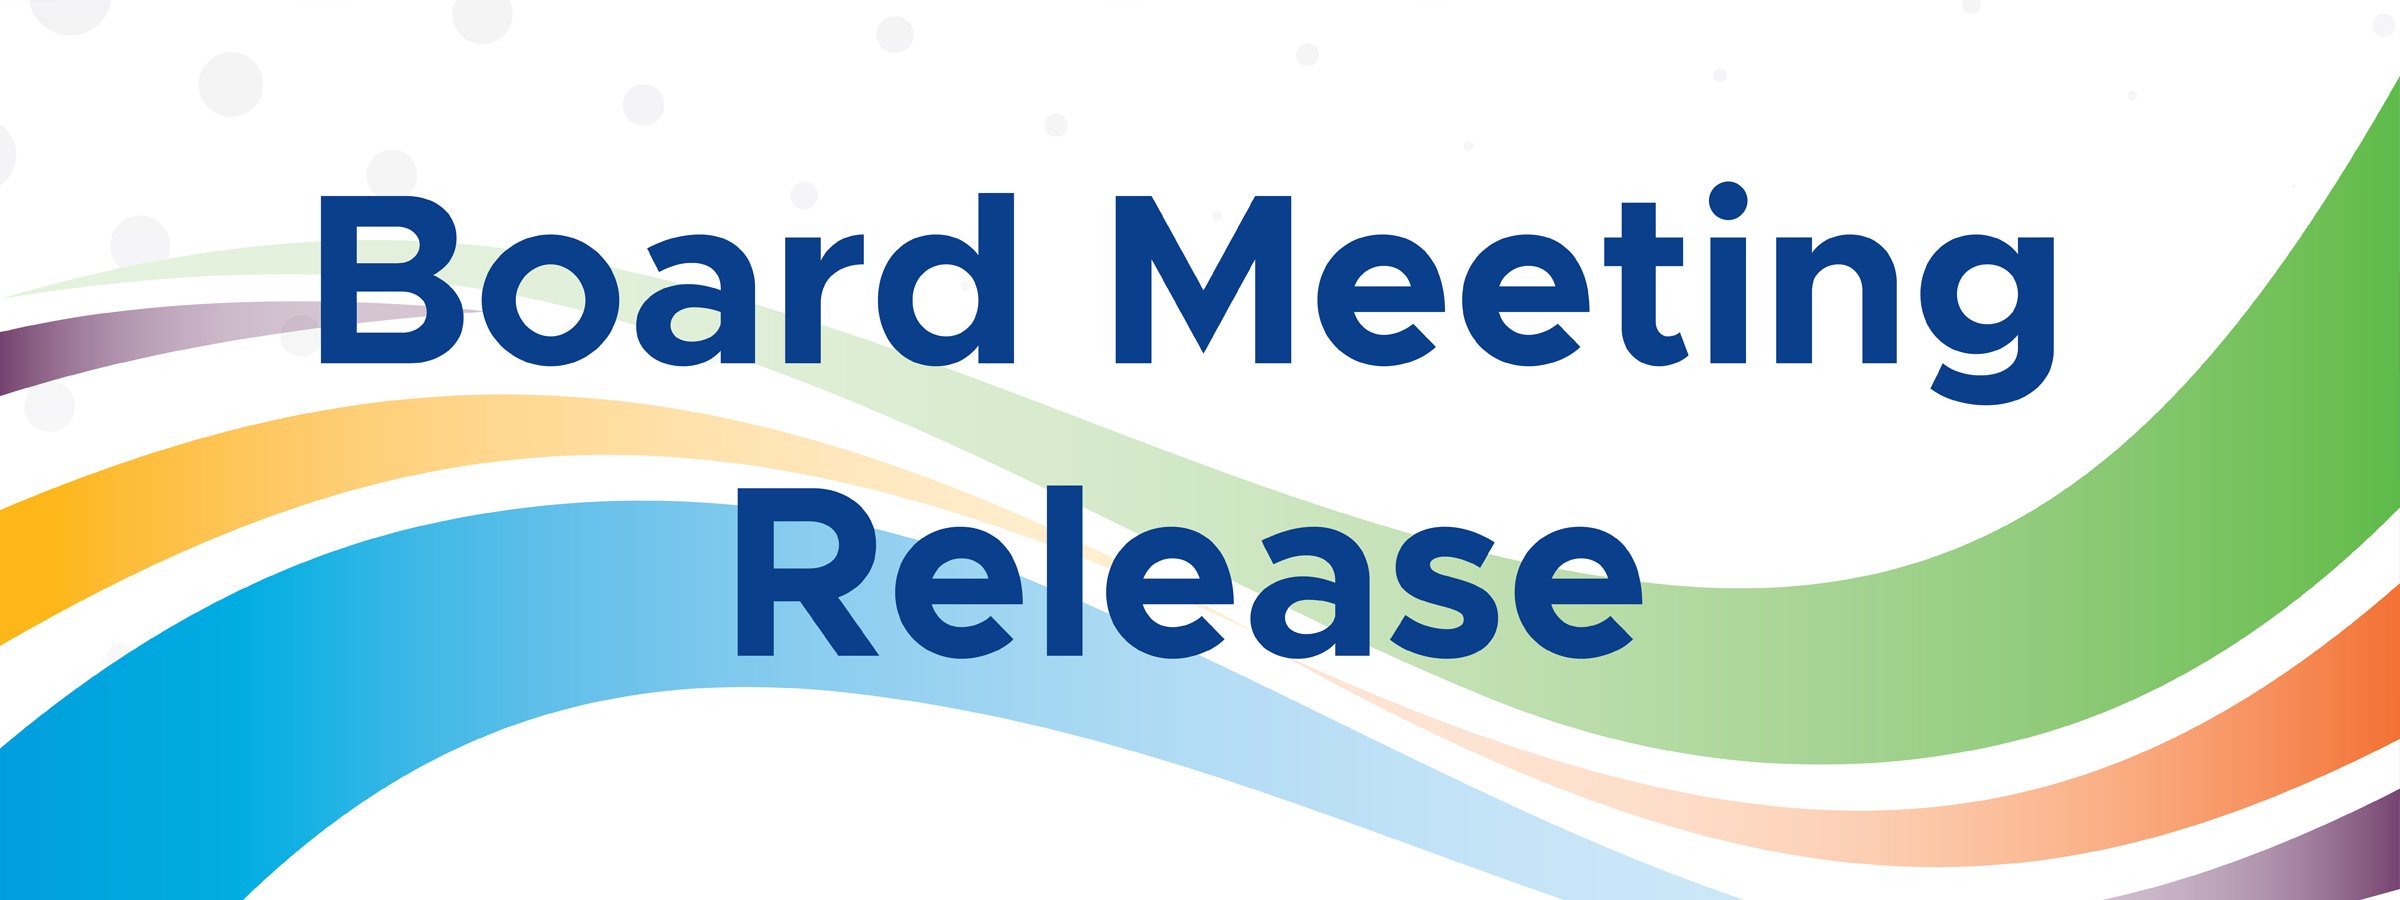 Board Meeting Release